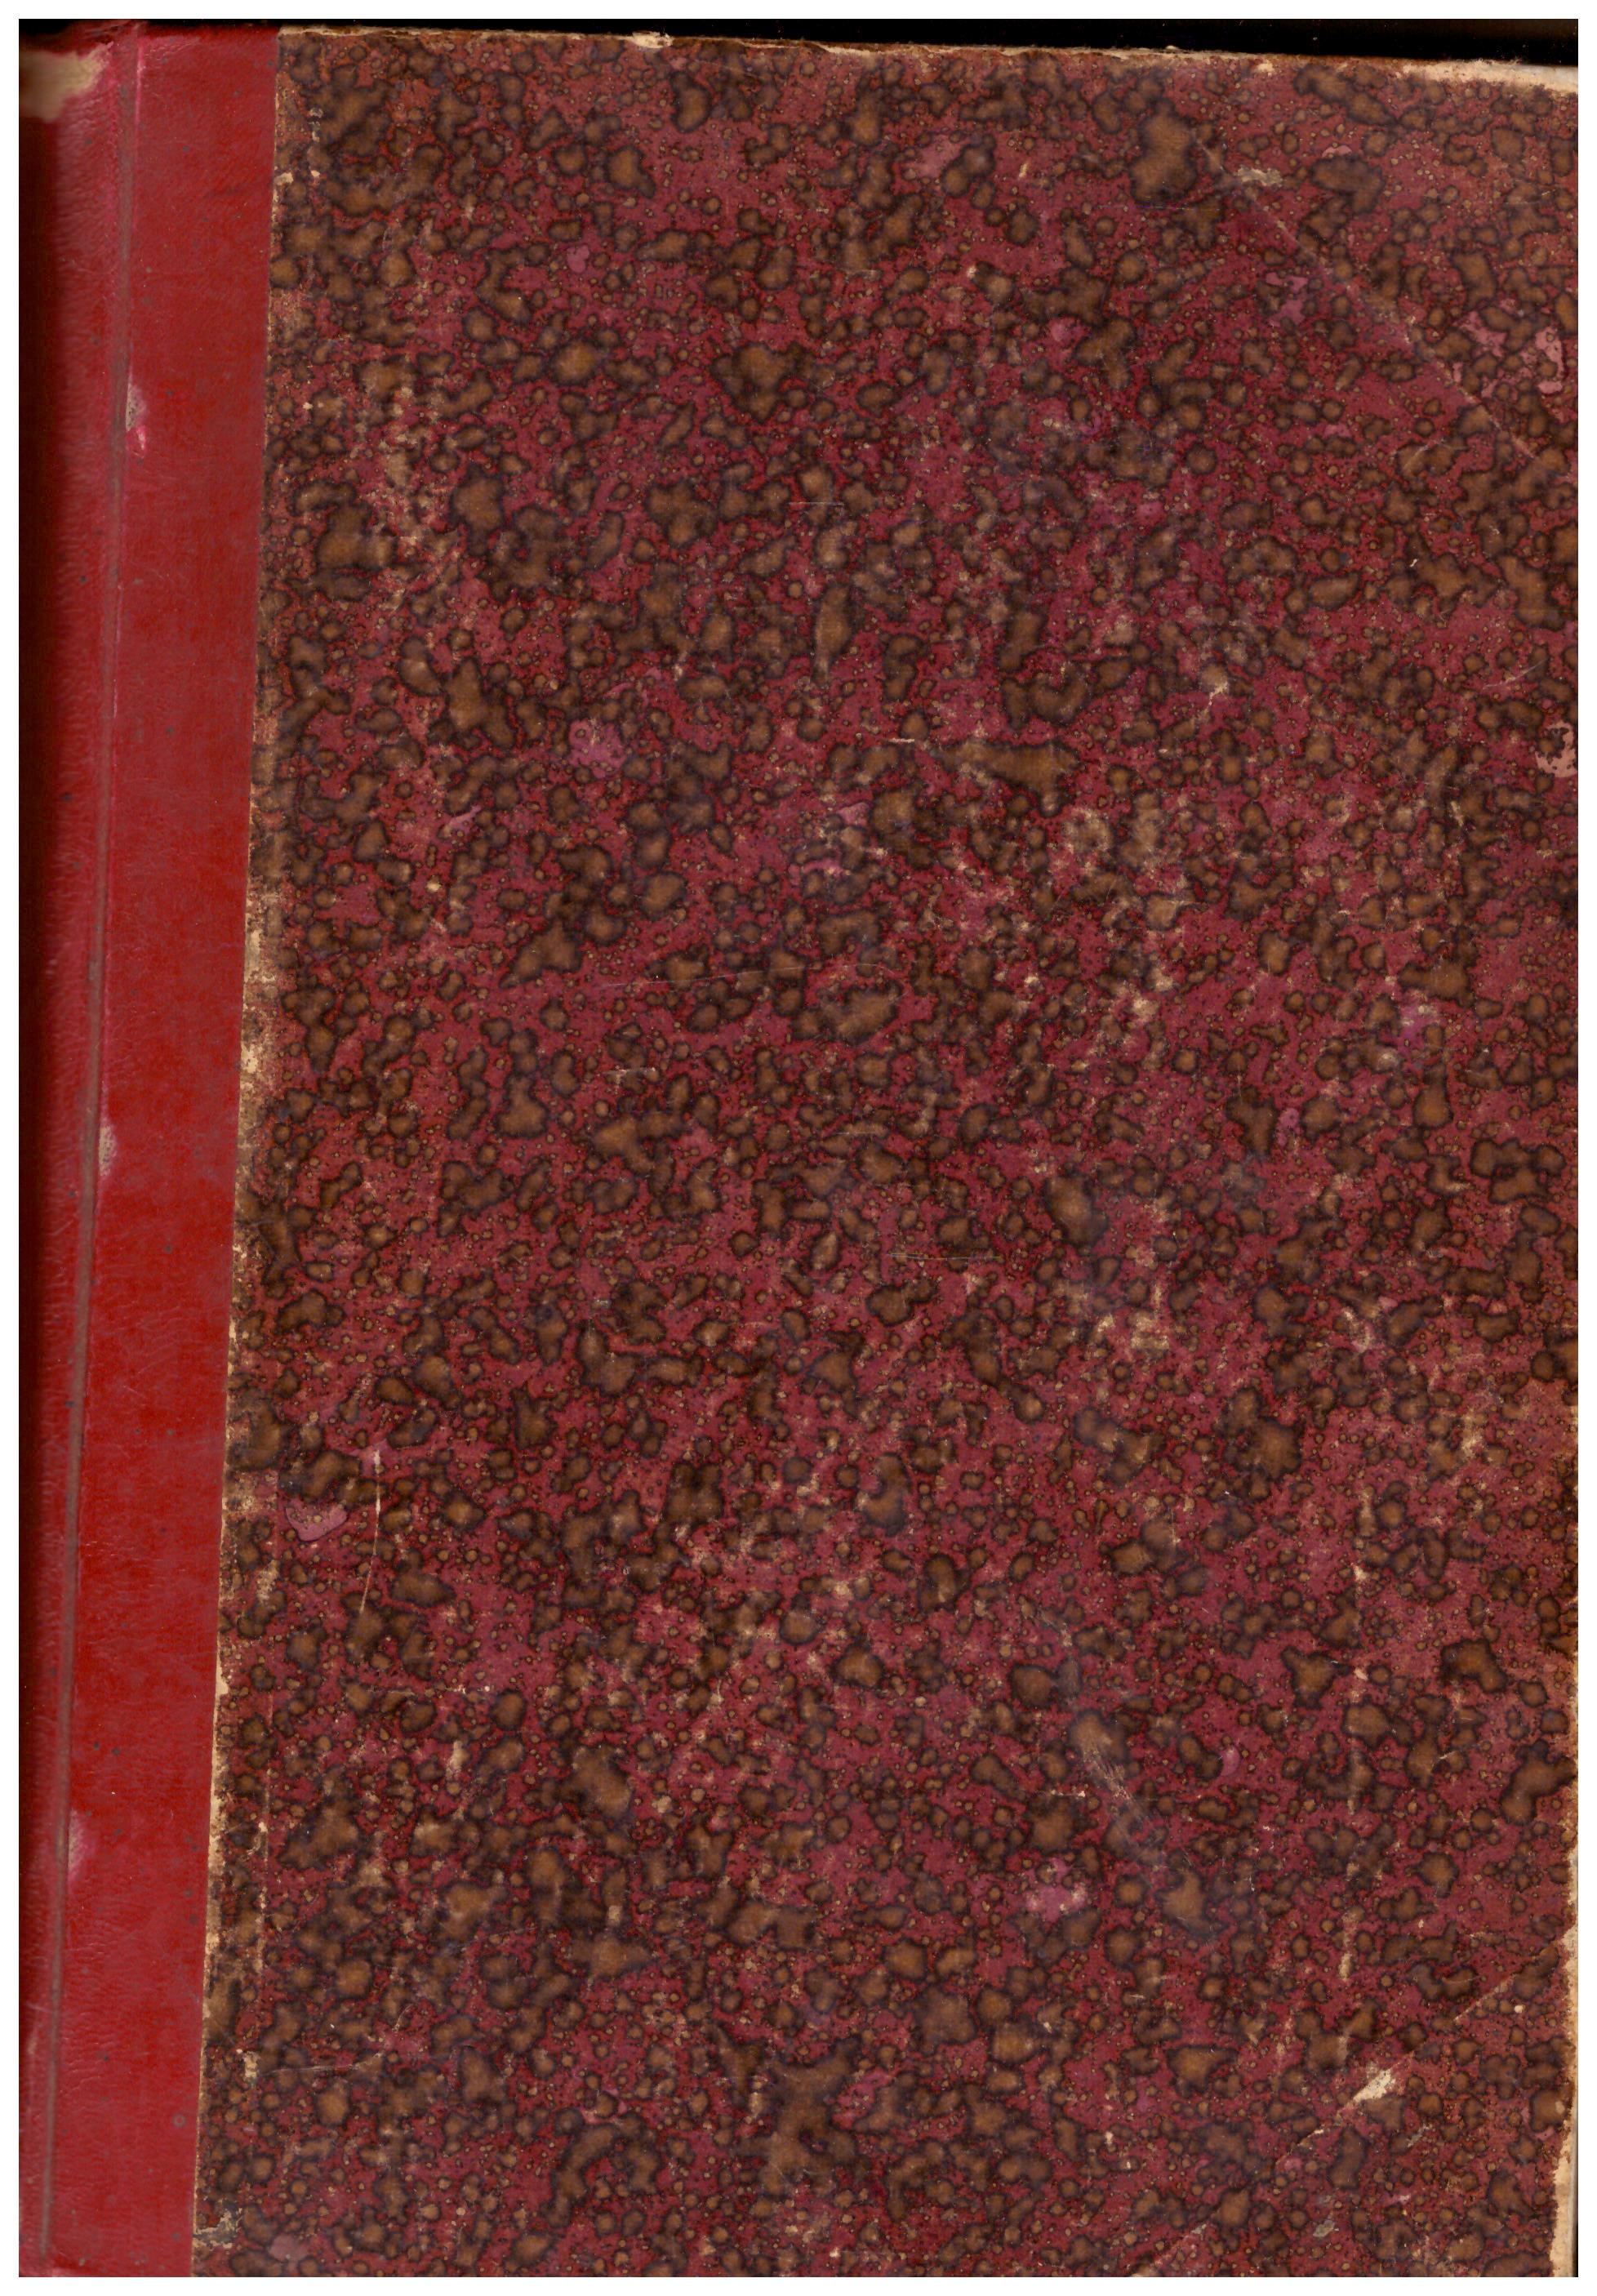 Titolo: Compendium theologiae moralis   Autore : P. Ioannis Petri Gury S. I.  editore: PRATI, 1901 EDITIO DECIMO QUINTA